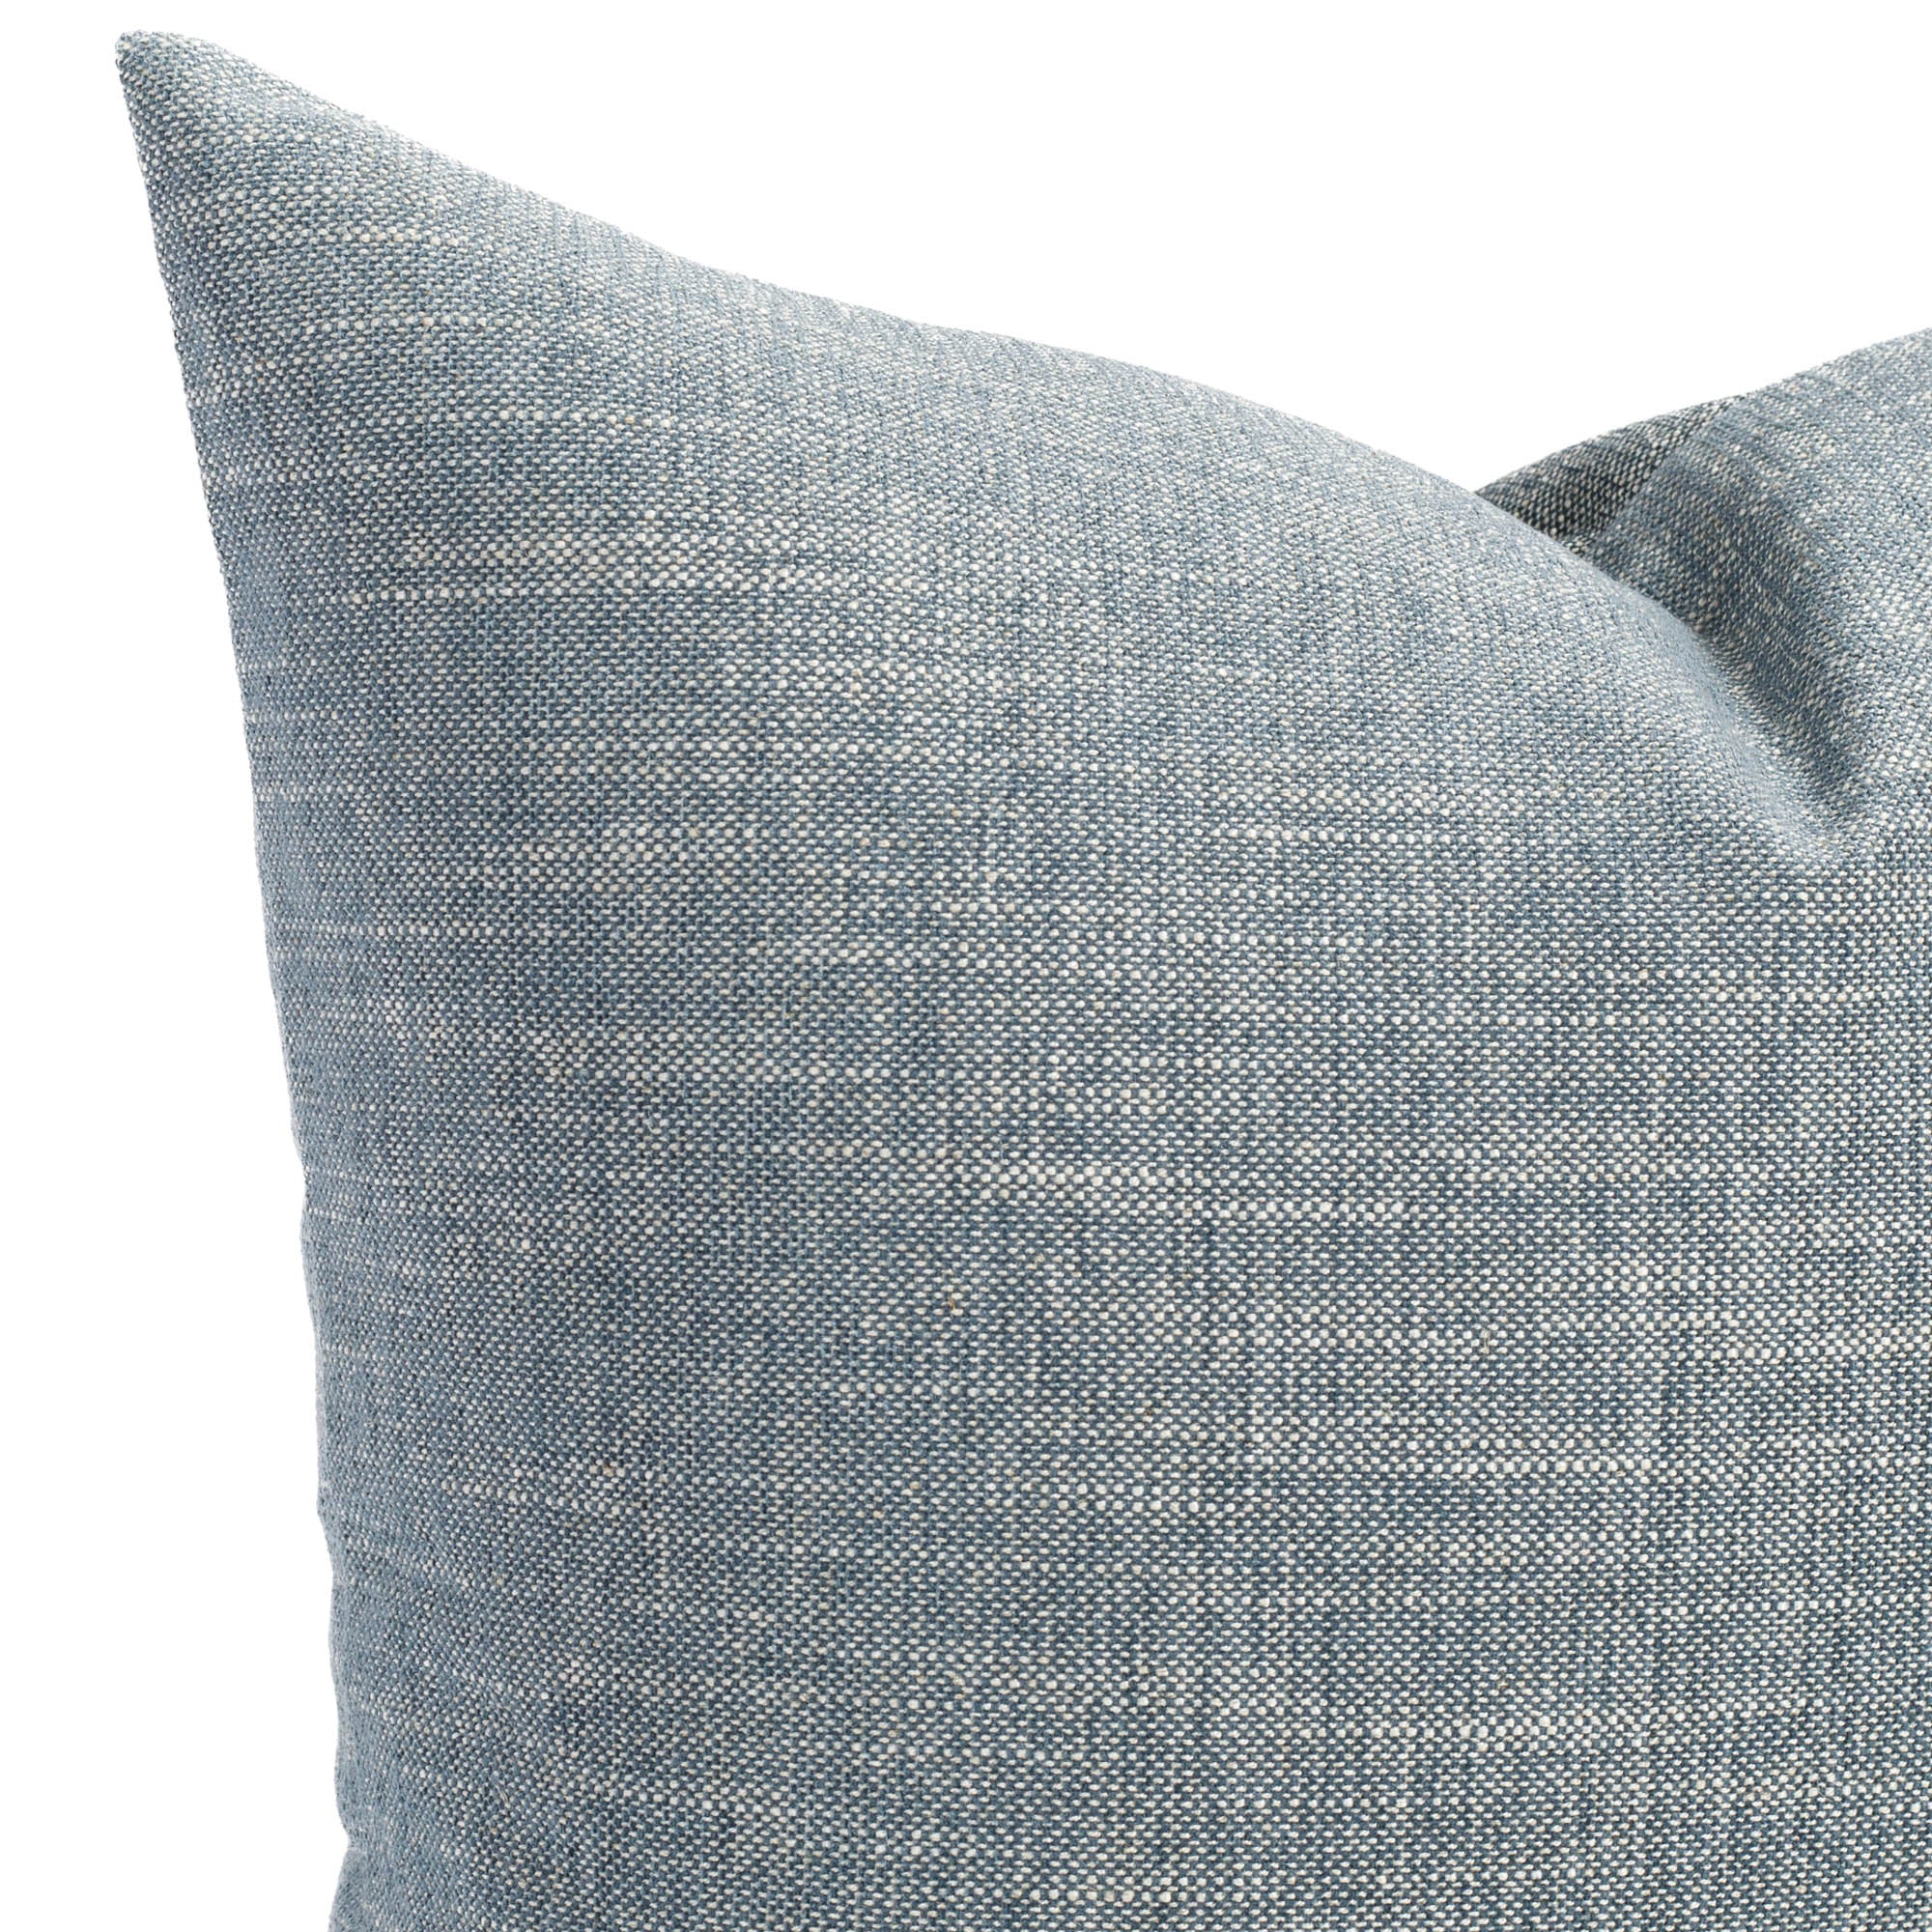  a soft stone blue throw pillow : close up view